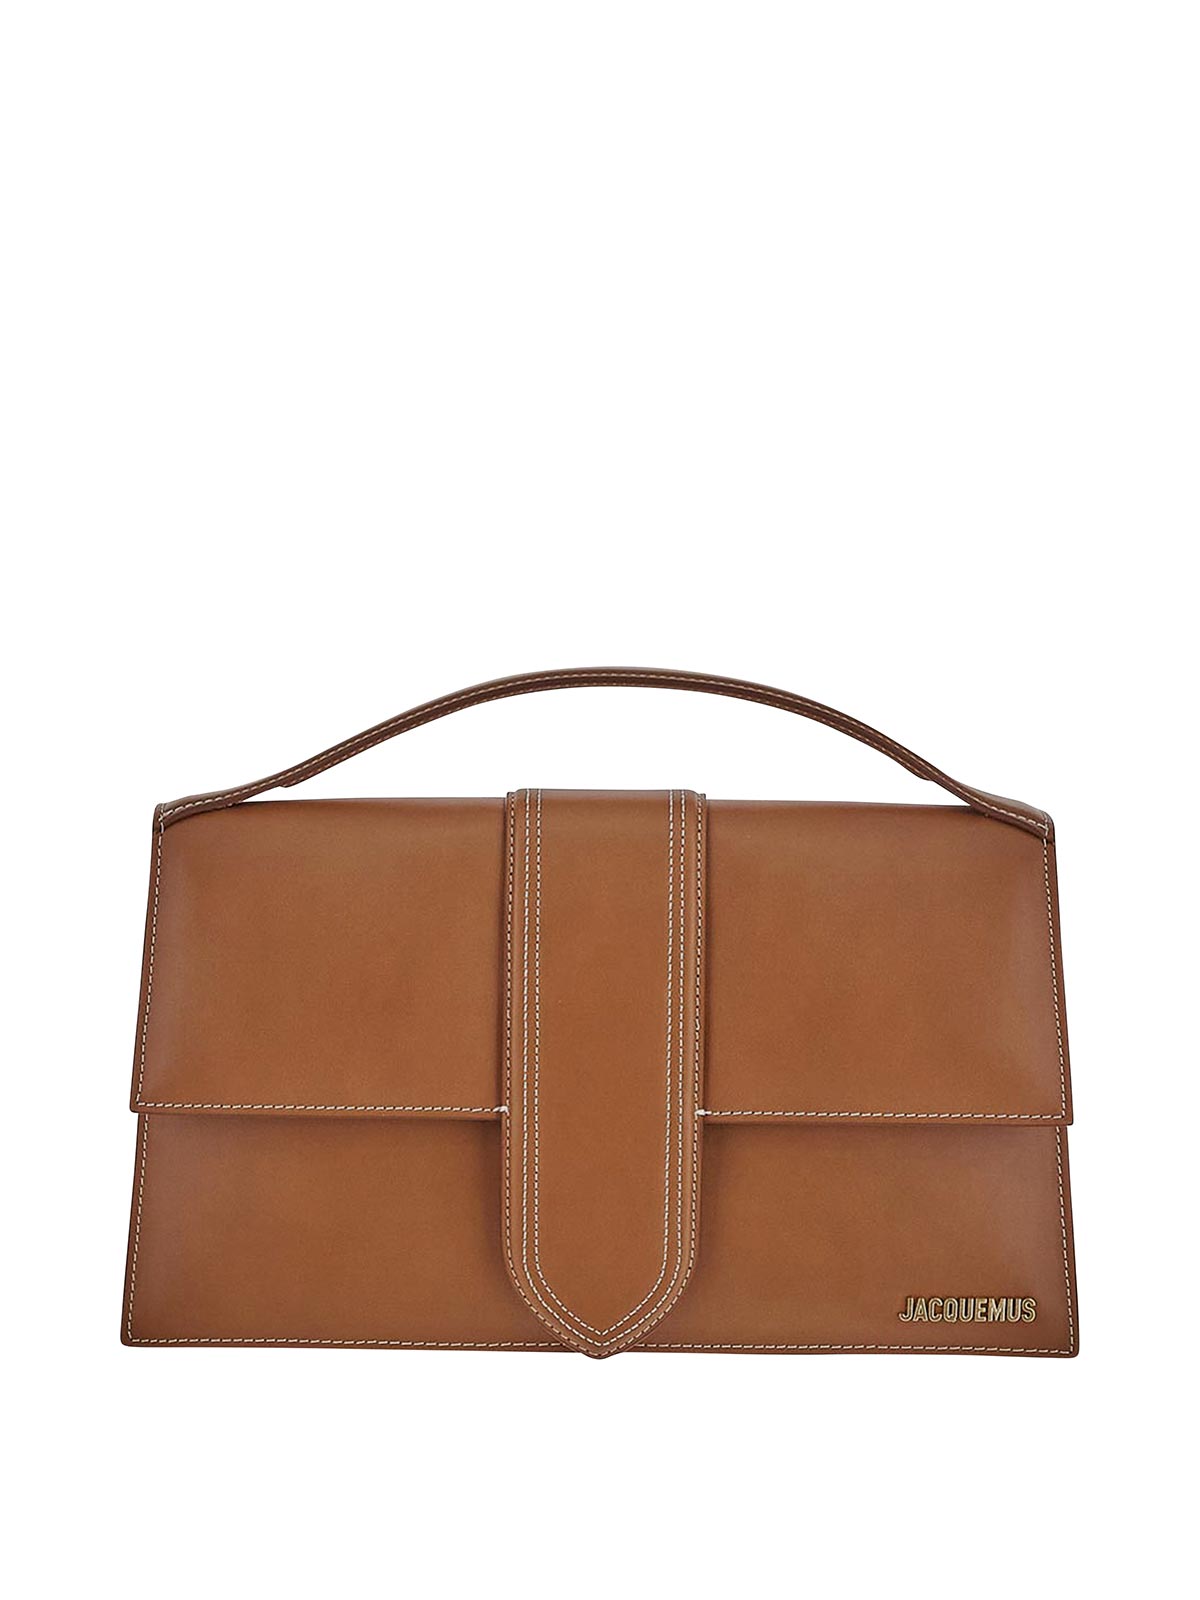 Jacquemus Handbag In Brown With Finish Logo